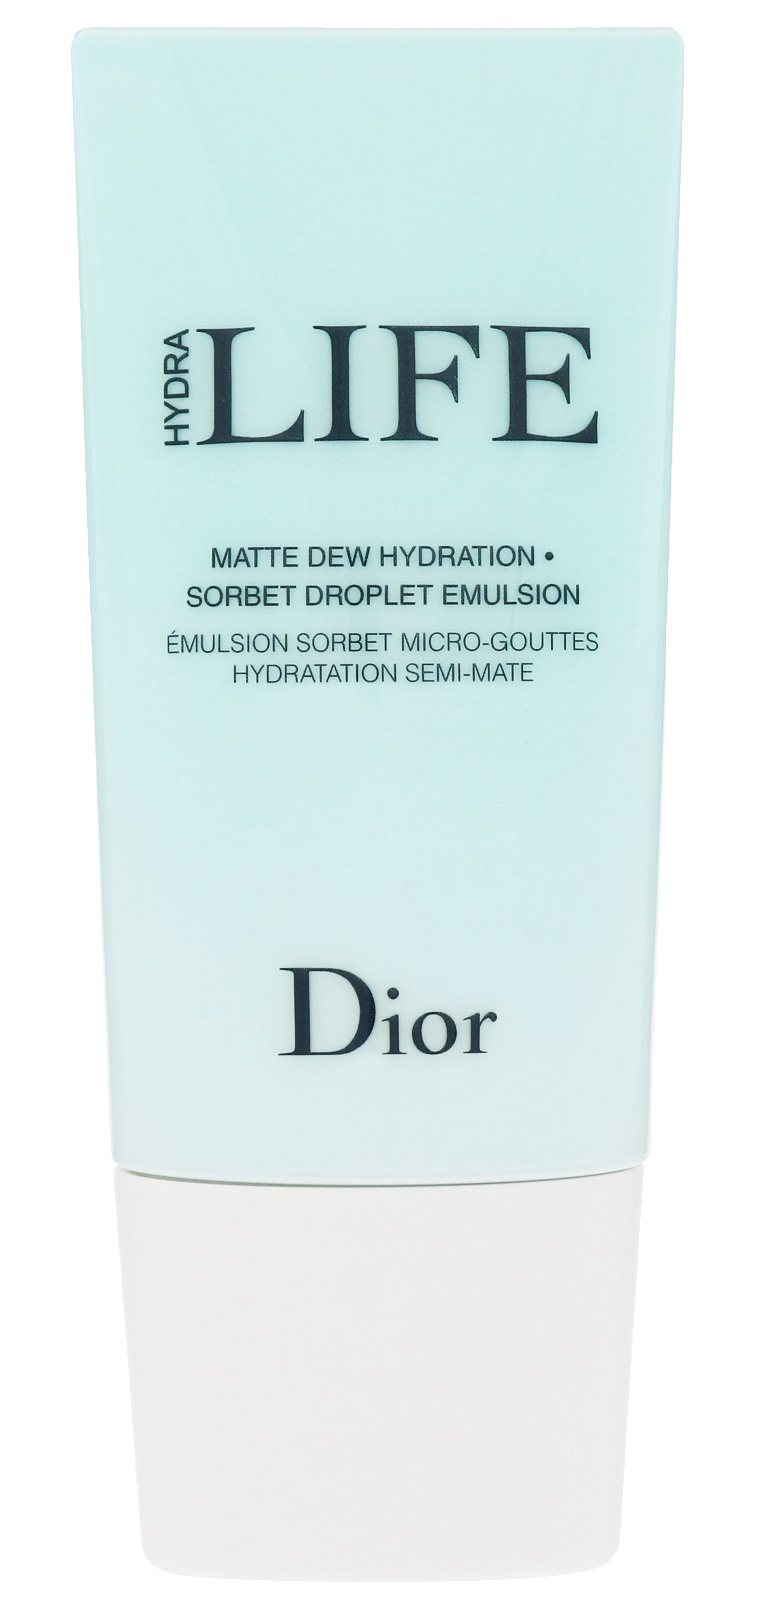 Dior Hydra Life Matte Dew Hydration•Sorbet Droplet Emulsion